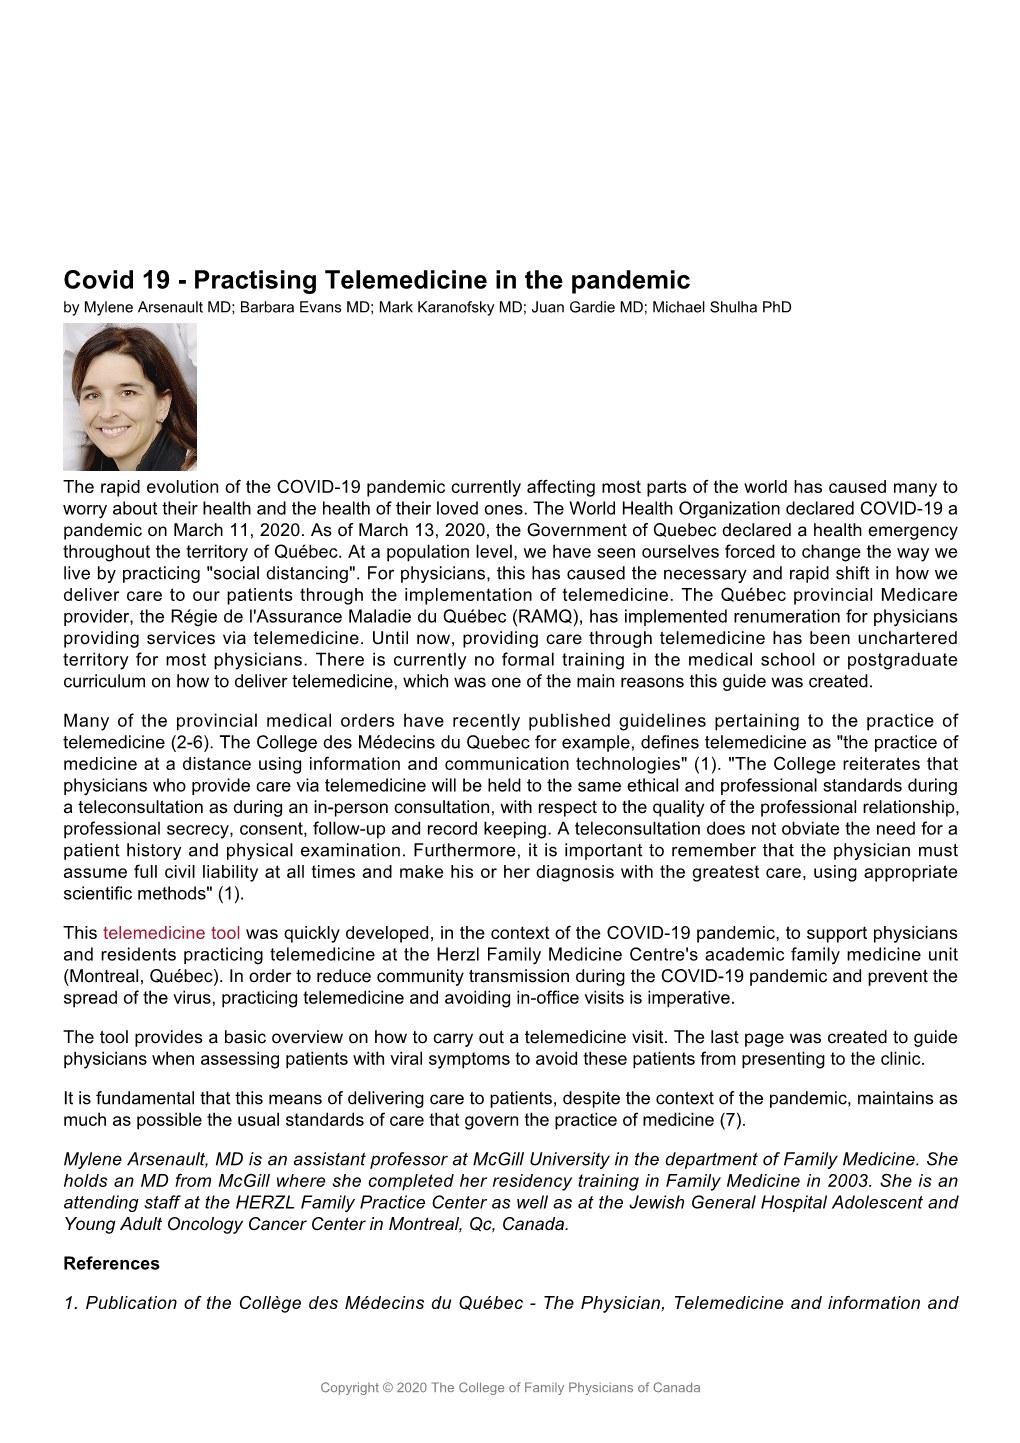 Covid 19 - Practising Telemedicine in the Pandemic by Mylene Arsenault MD; Barbara Evans MD; Mark Karanofsky MD; Juan Gardie MD; Michael Shulha Phd